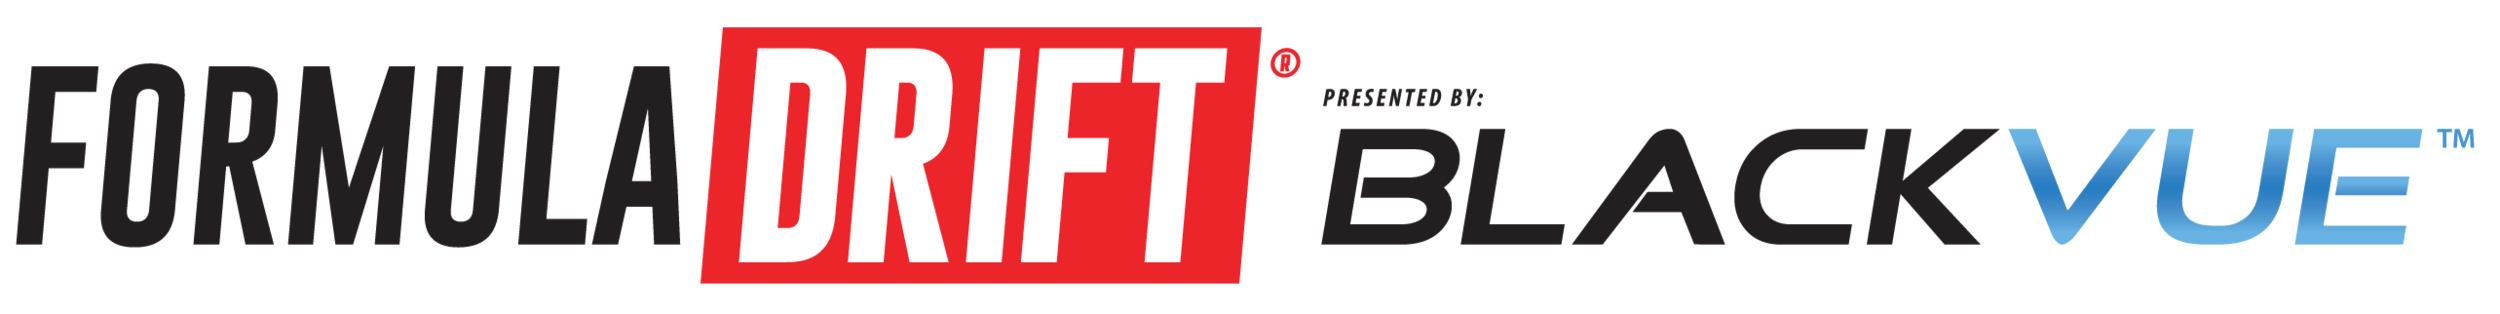 2016_FD-Main-Logo.png